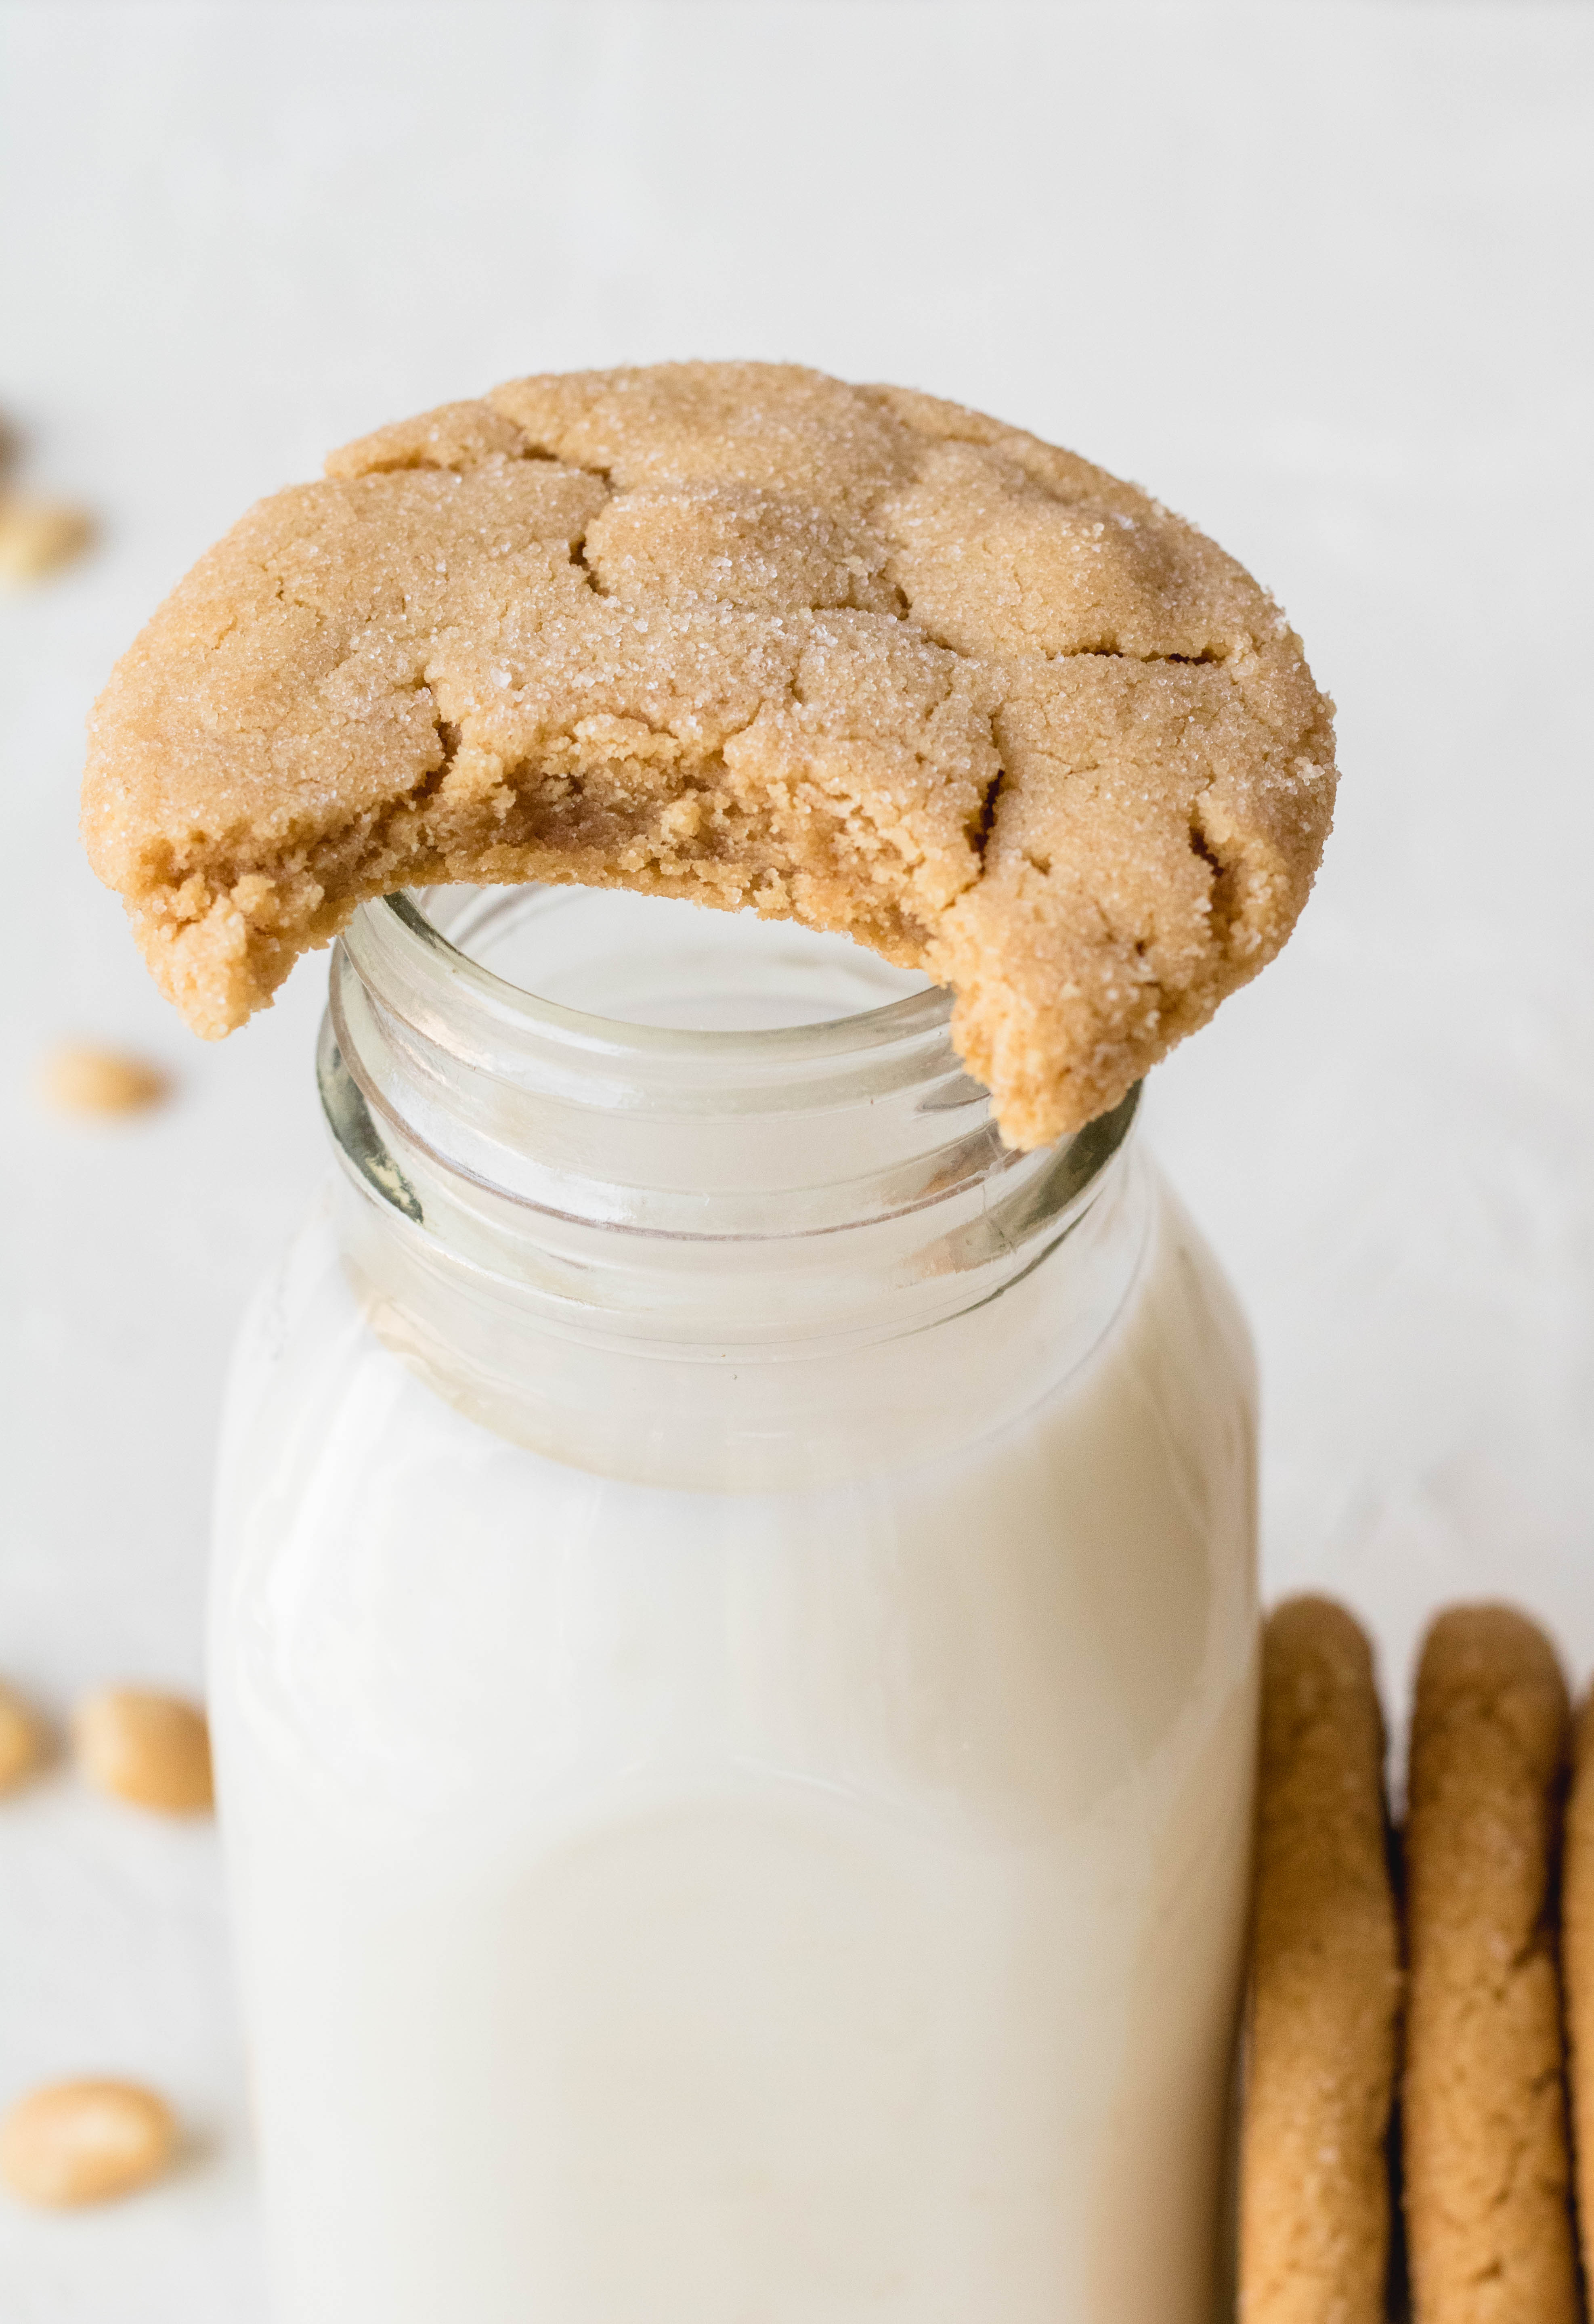 The best peanut butter cookie recipe